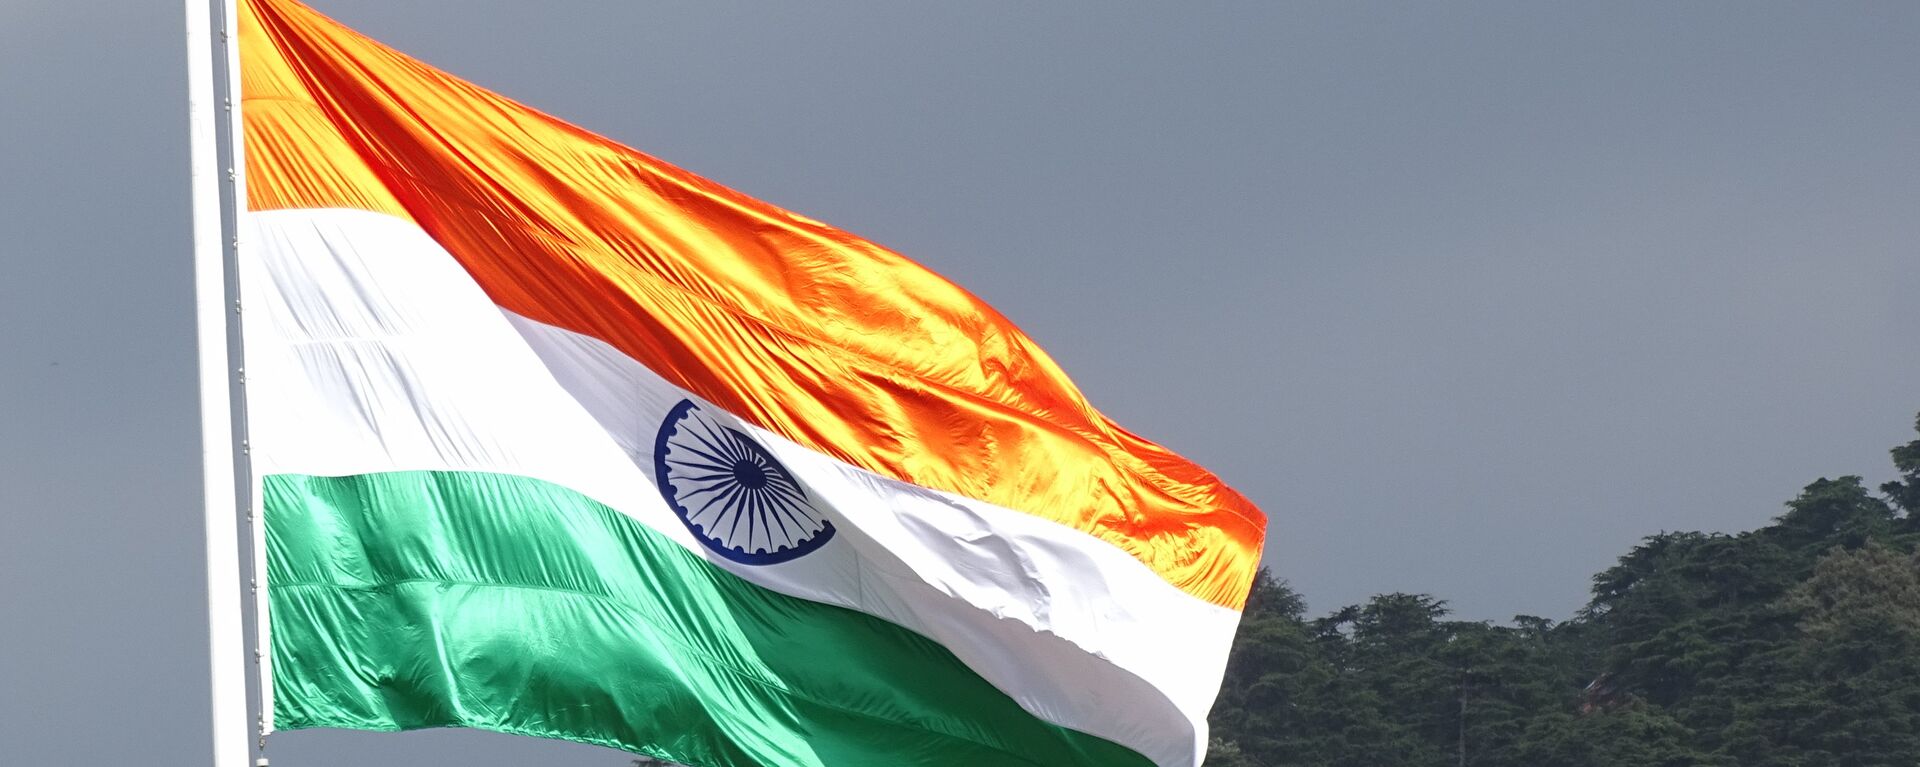 Bandera de la India - Sputnik Mundo, 1920, 10.07.2021